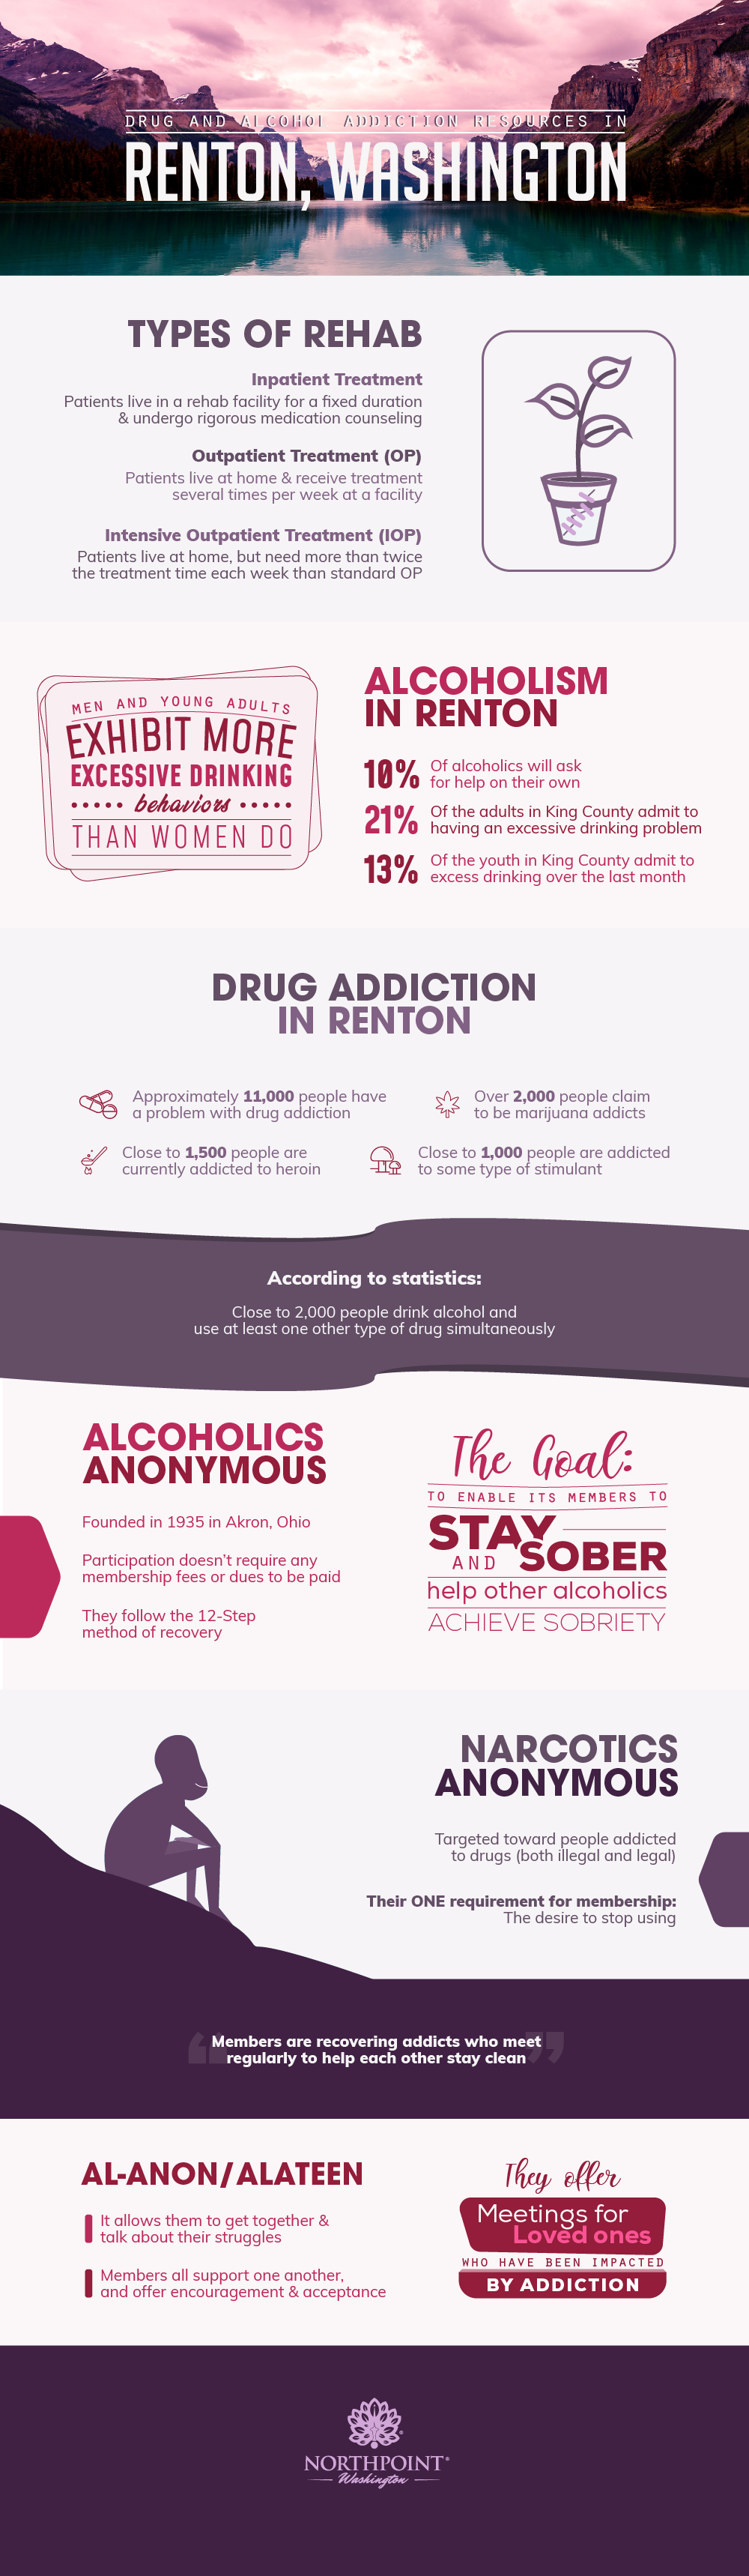 Renton, Washington Infographic